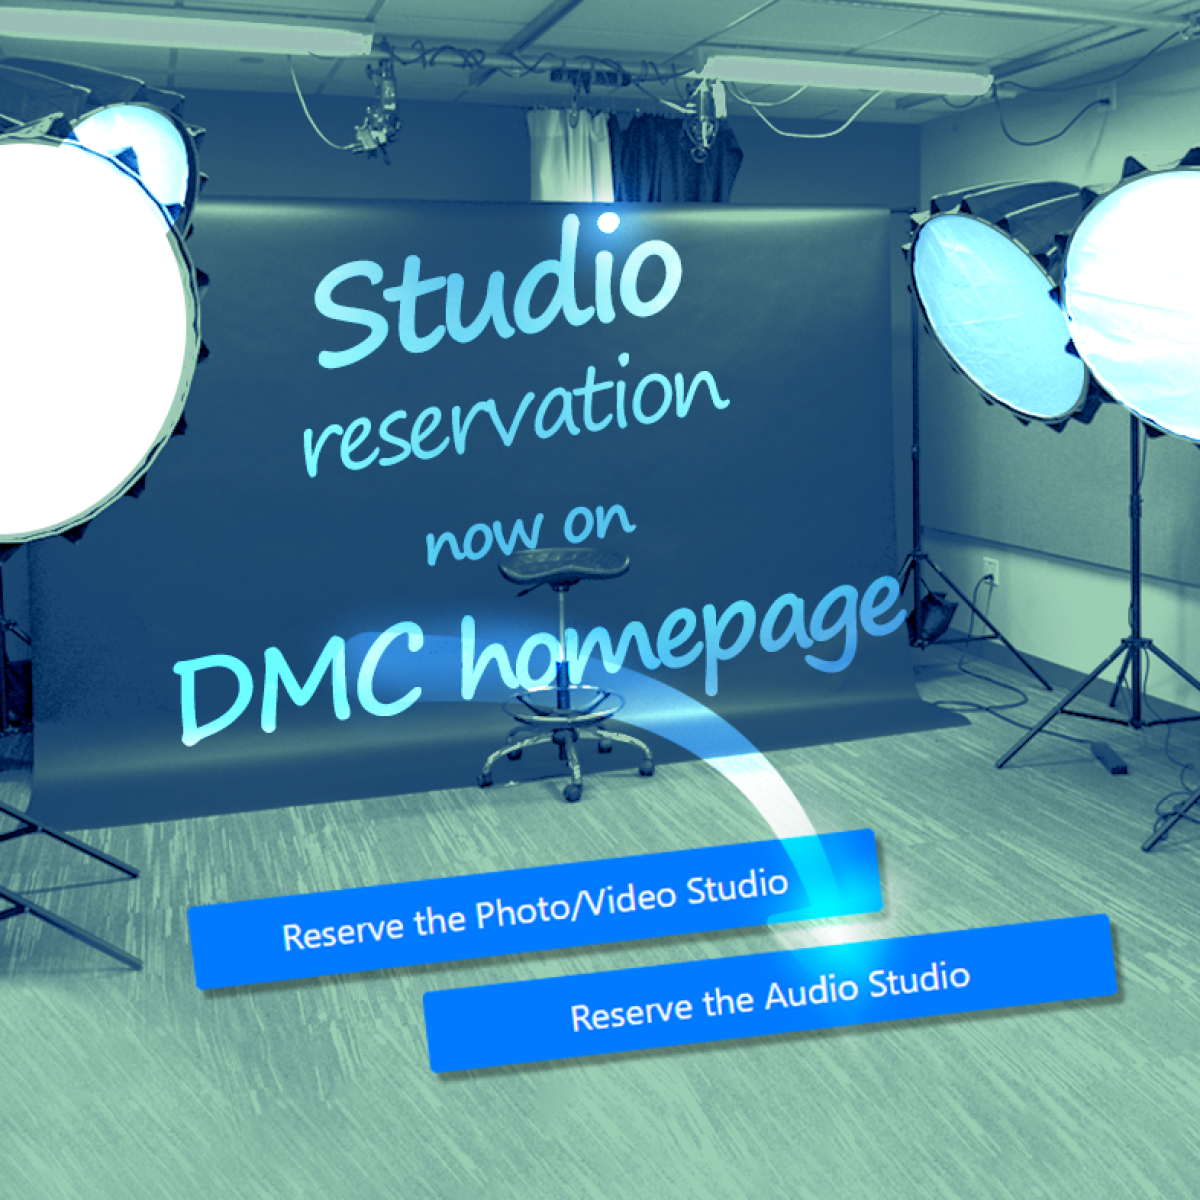 Reserve Studios on the DMC homepage